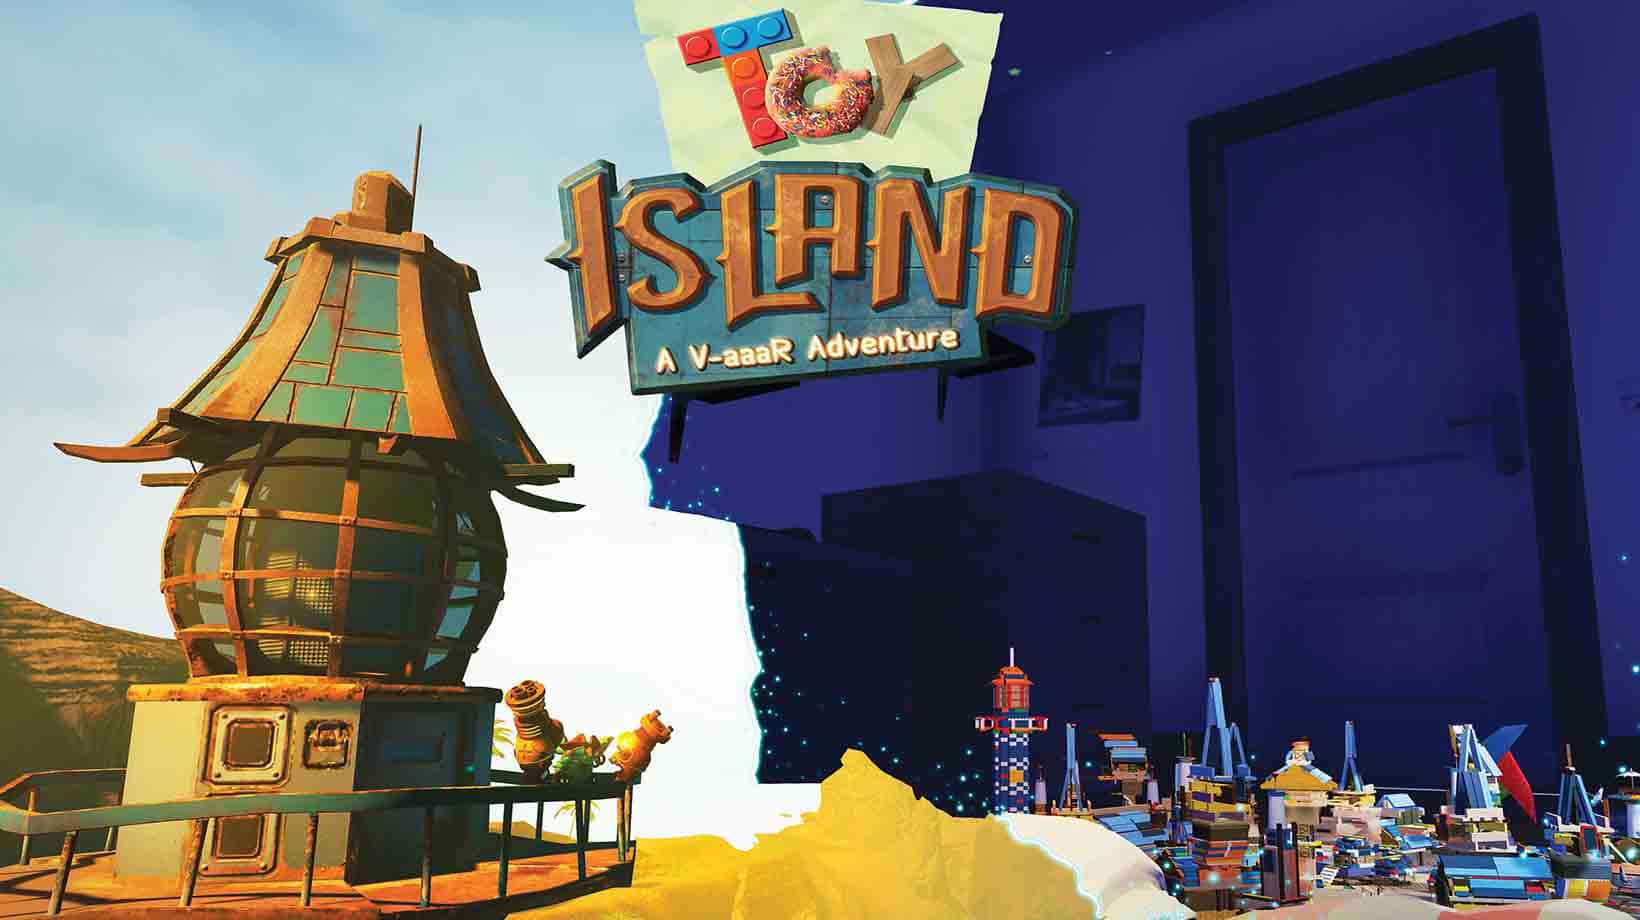 Toy Island - a VR Adventure